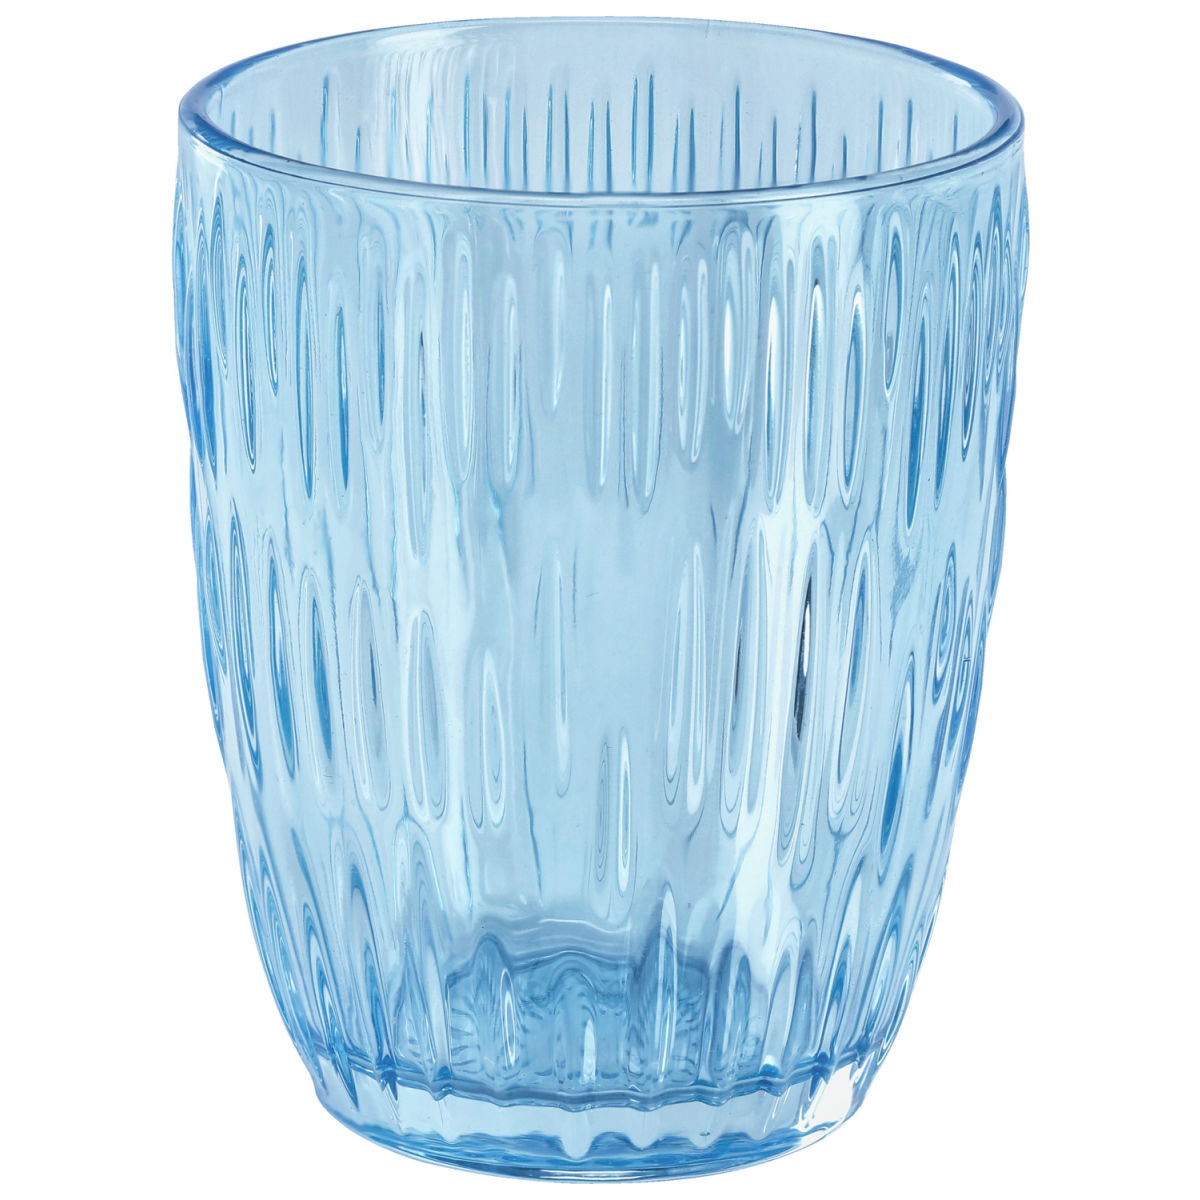 Vega Waterglas Kalea; 280ml, 8x9.8 cm (ØxH); lichtblauw; 6 stuk / verpakking